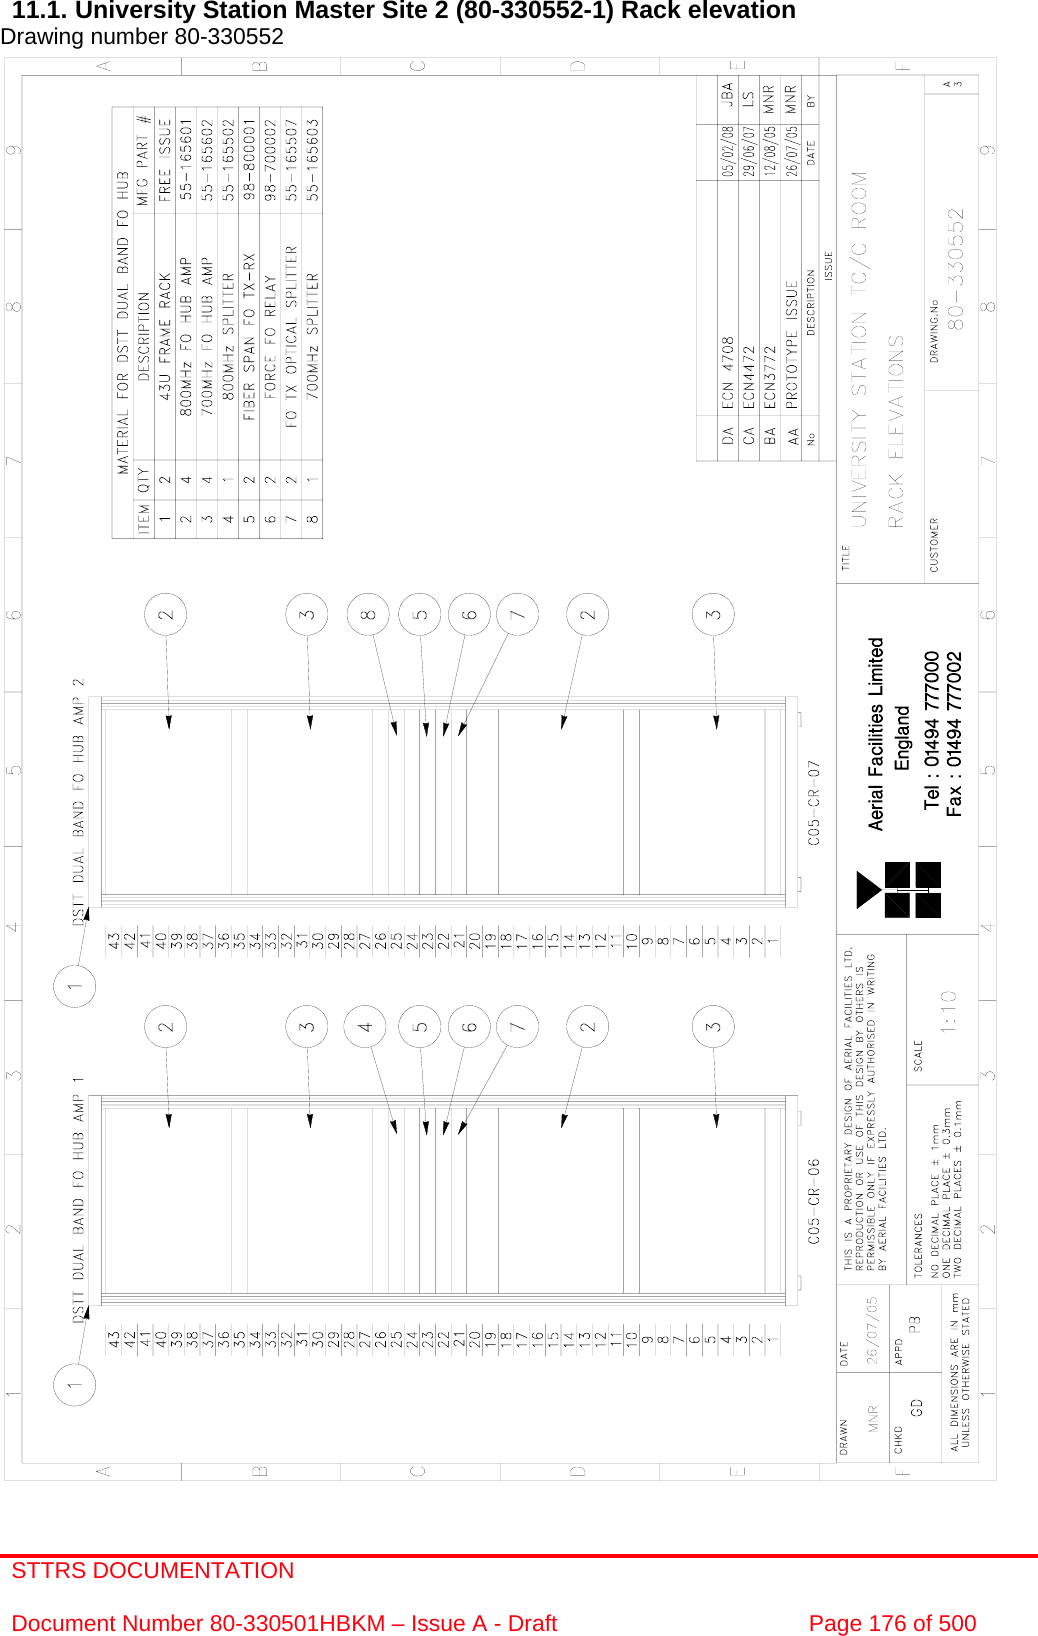 STTRS DOCUMENTATION  Document Number 80-330501HBKM – Issue A - Draft  Page 176 of 500   11.1. University Station Master Site 2 (80-330552-1) Rack elevation Drawing number 80-330552                                                       